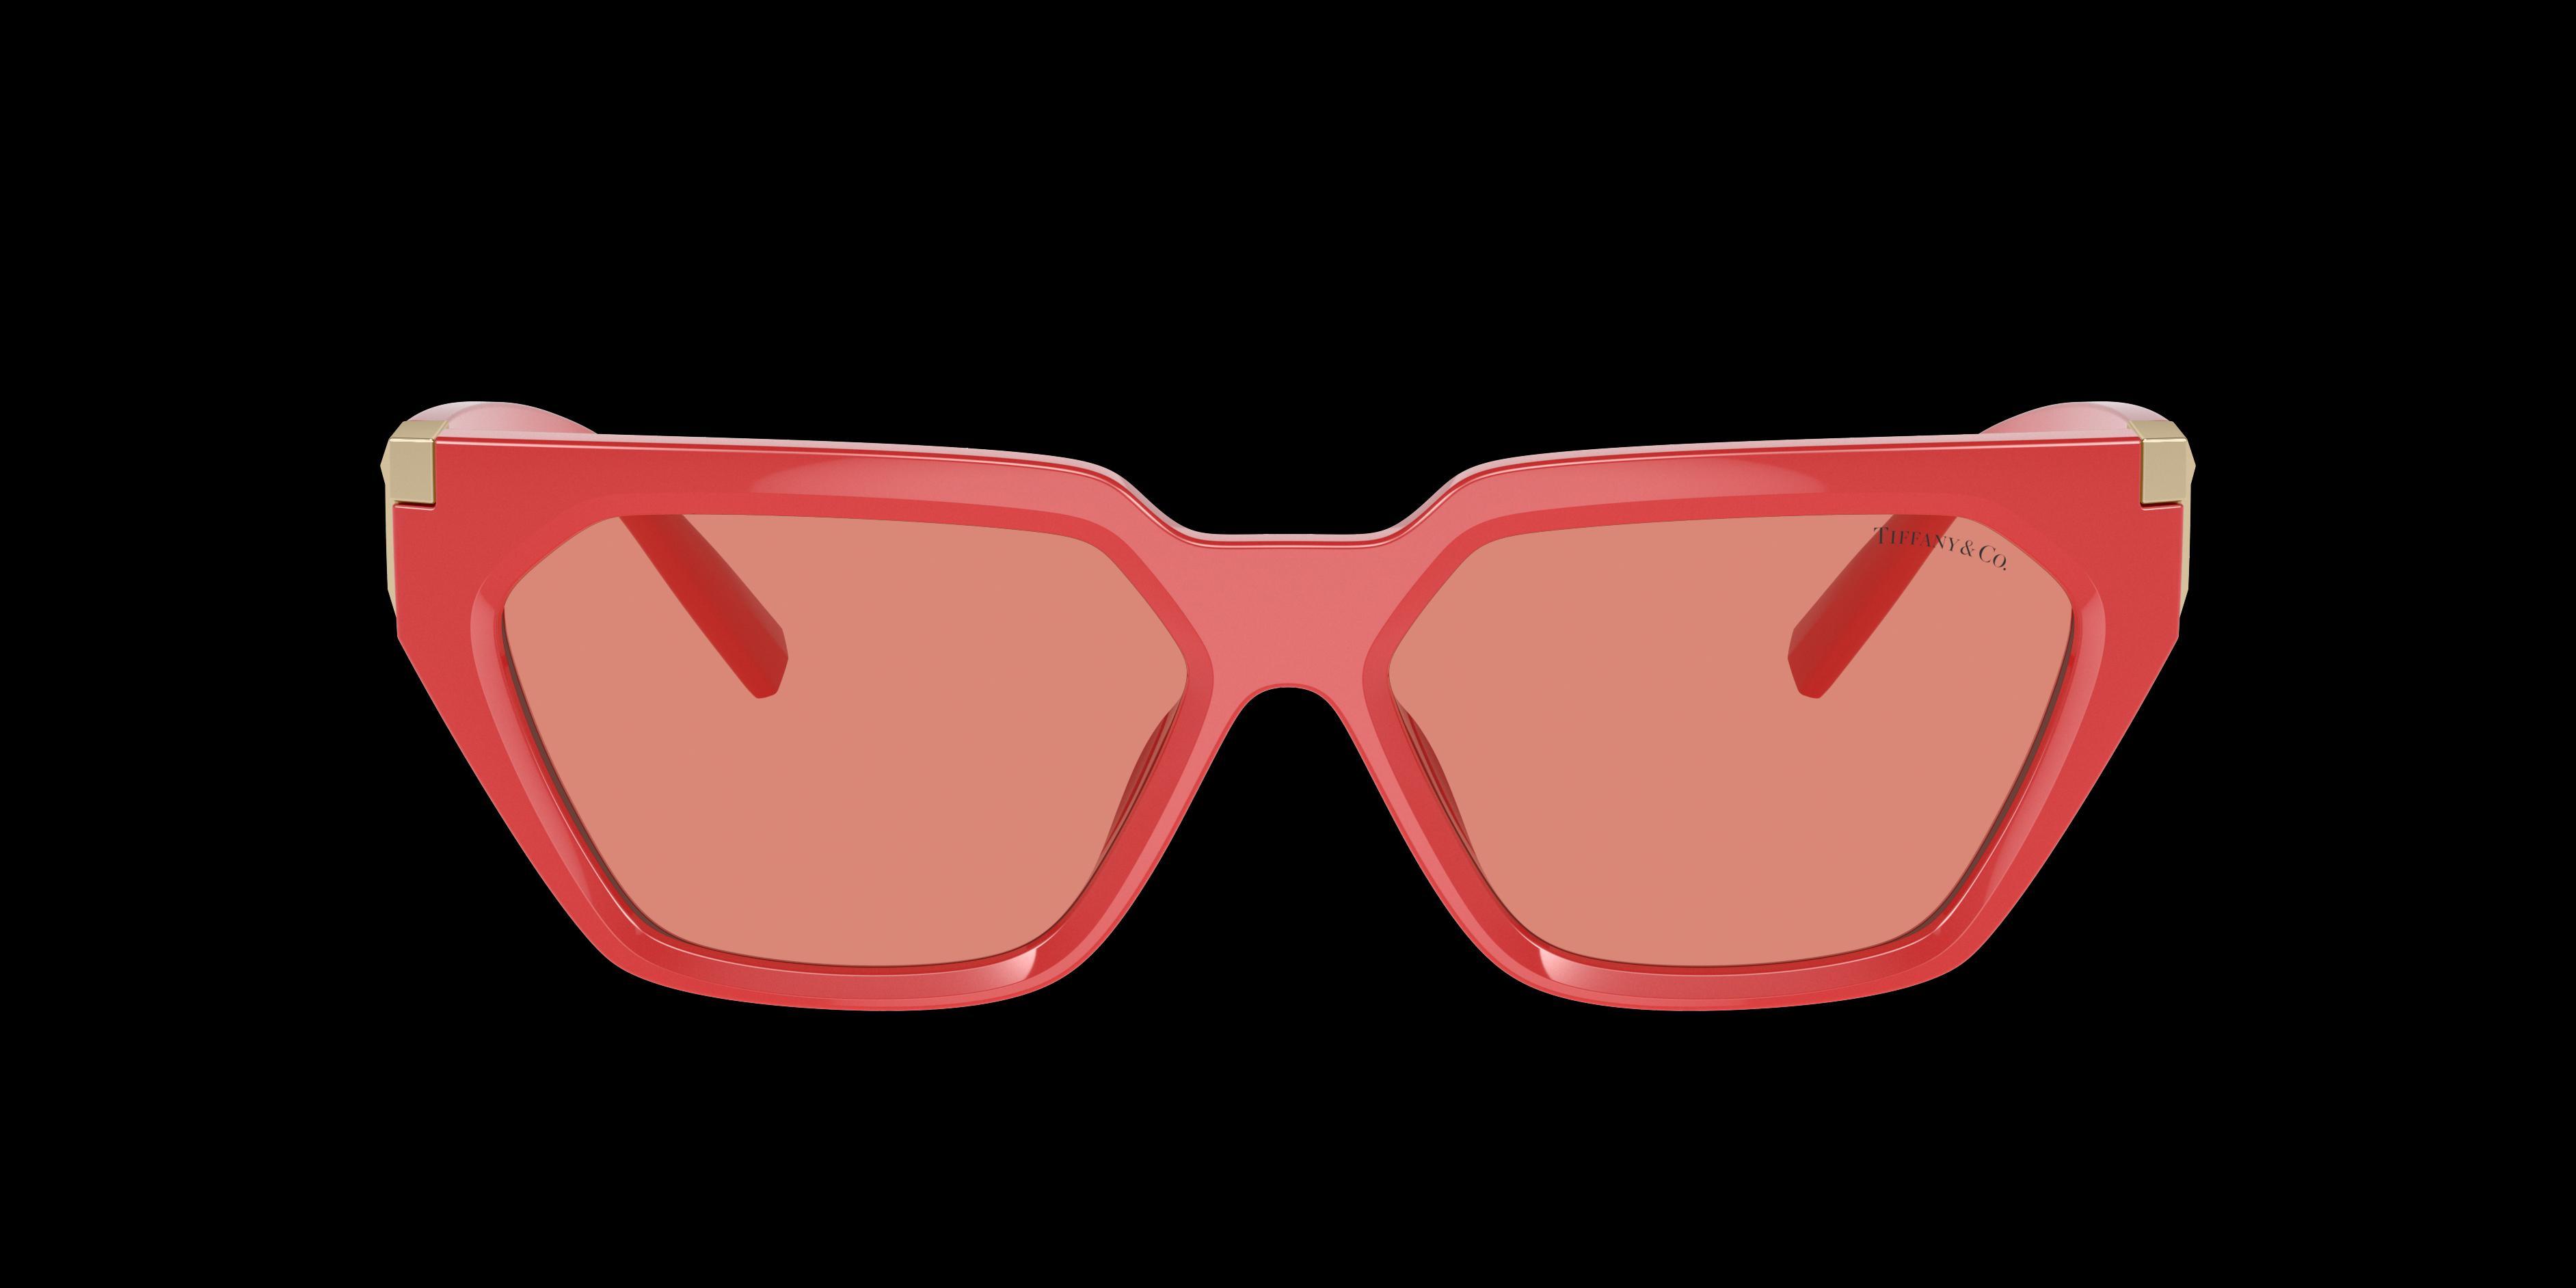 Tiffany & Co. 56mm Irregular Sunglasses Product Image